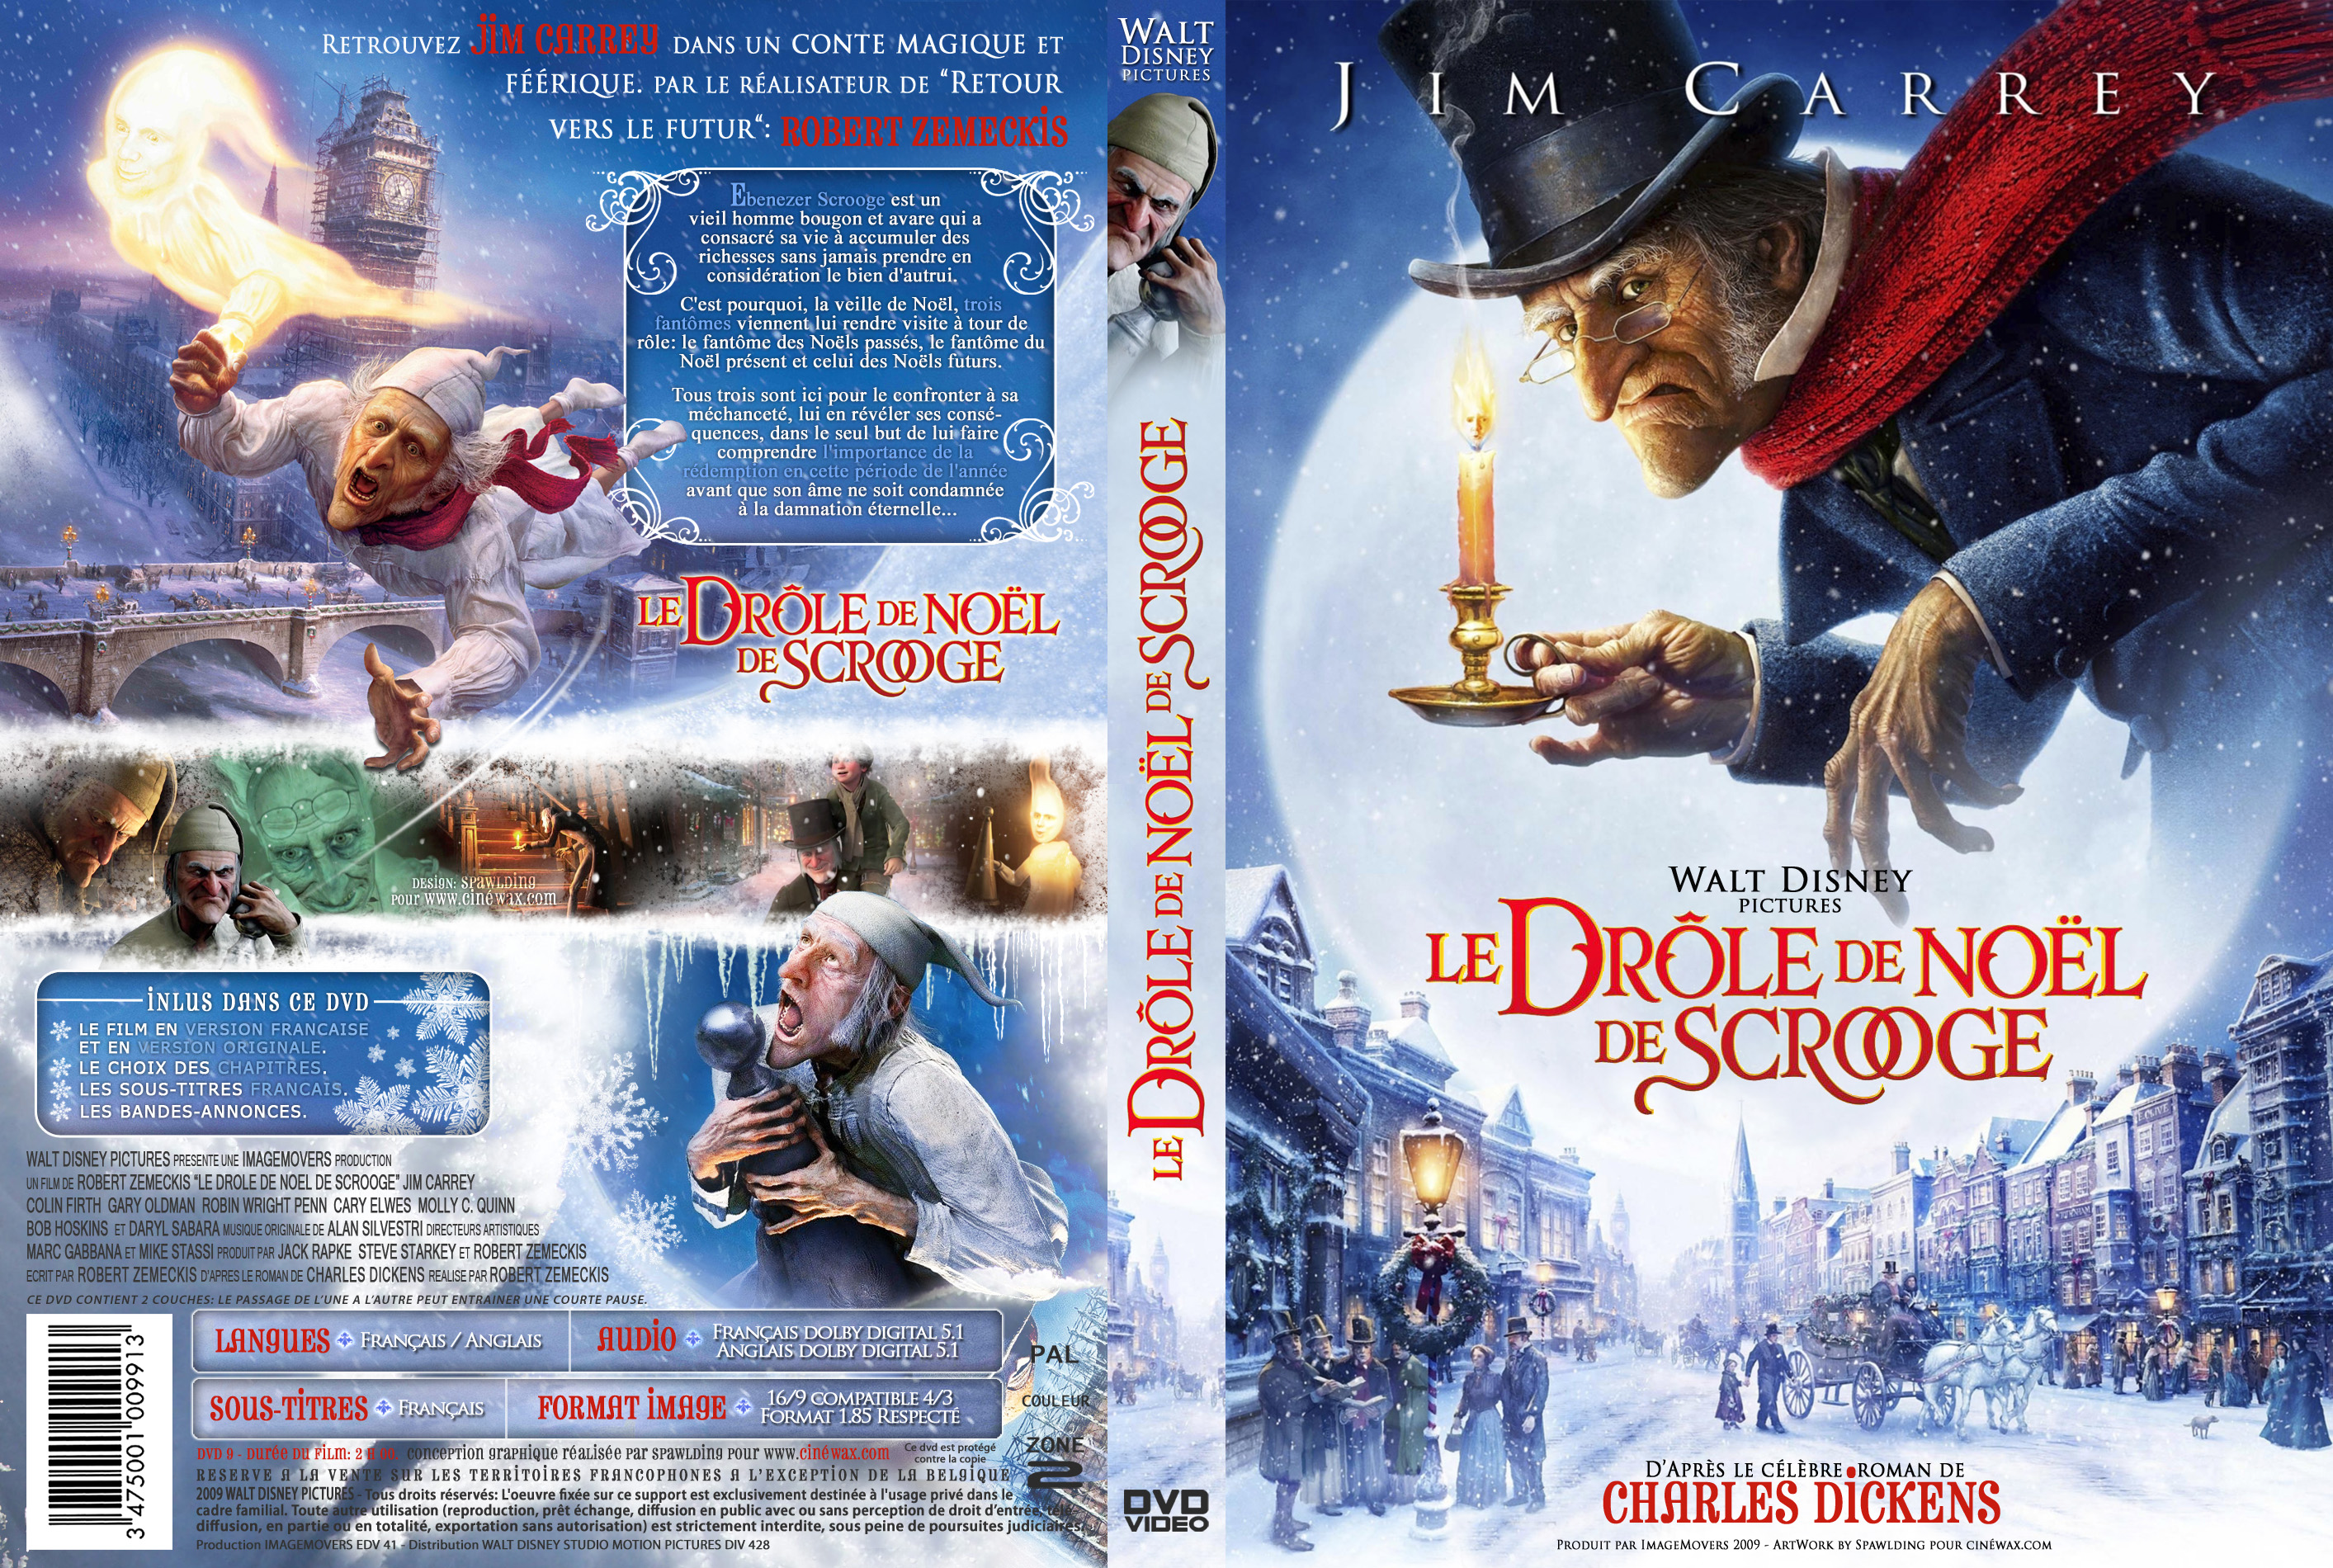 Jaquette DVD Le drle de Noel de Scrooge custom